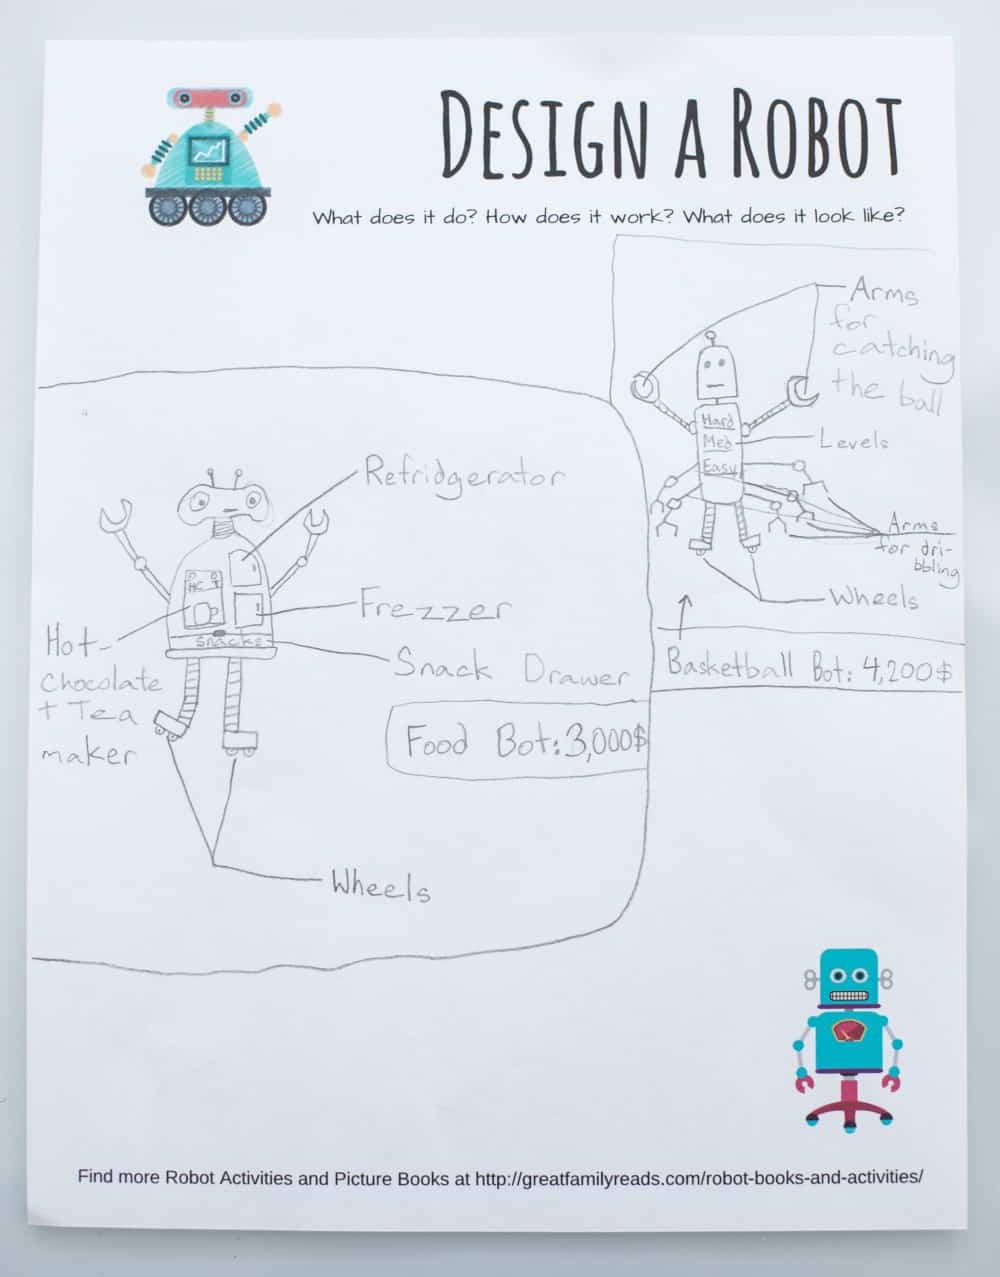 Design a robot creative STEM activity for kids